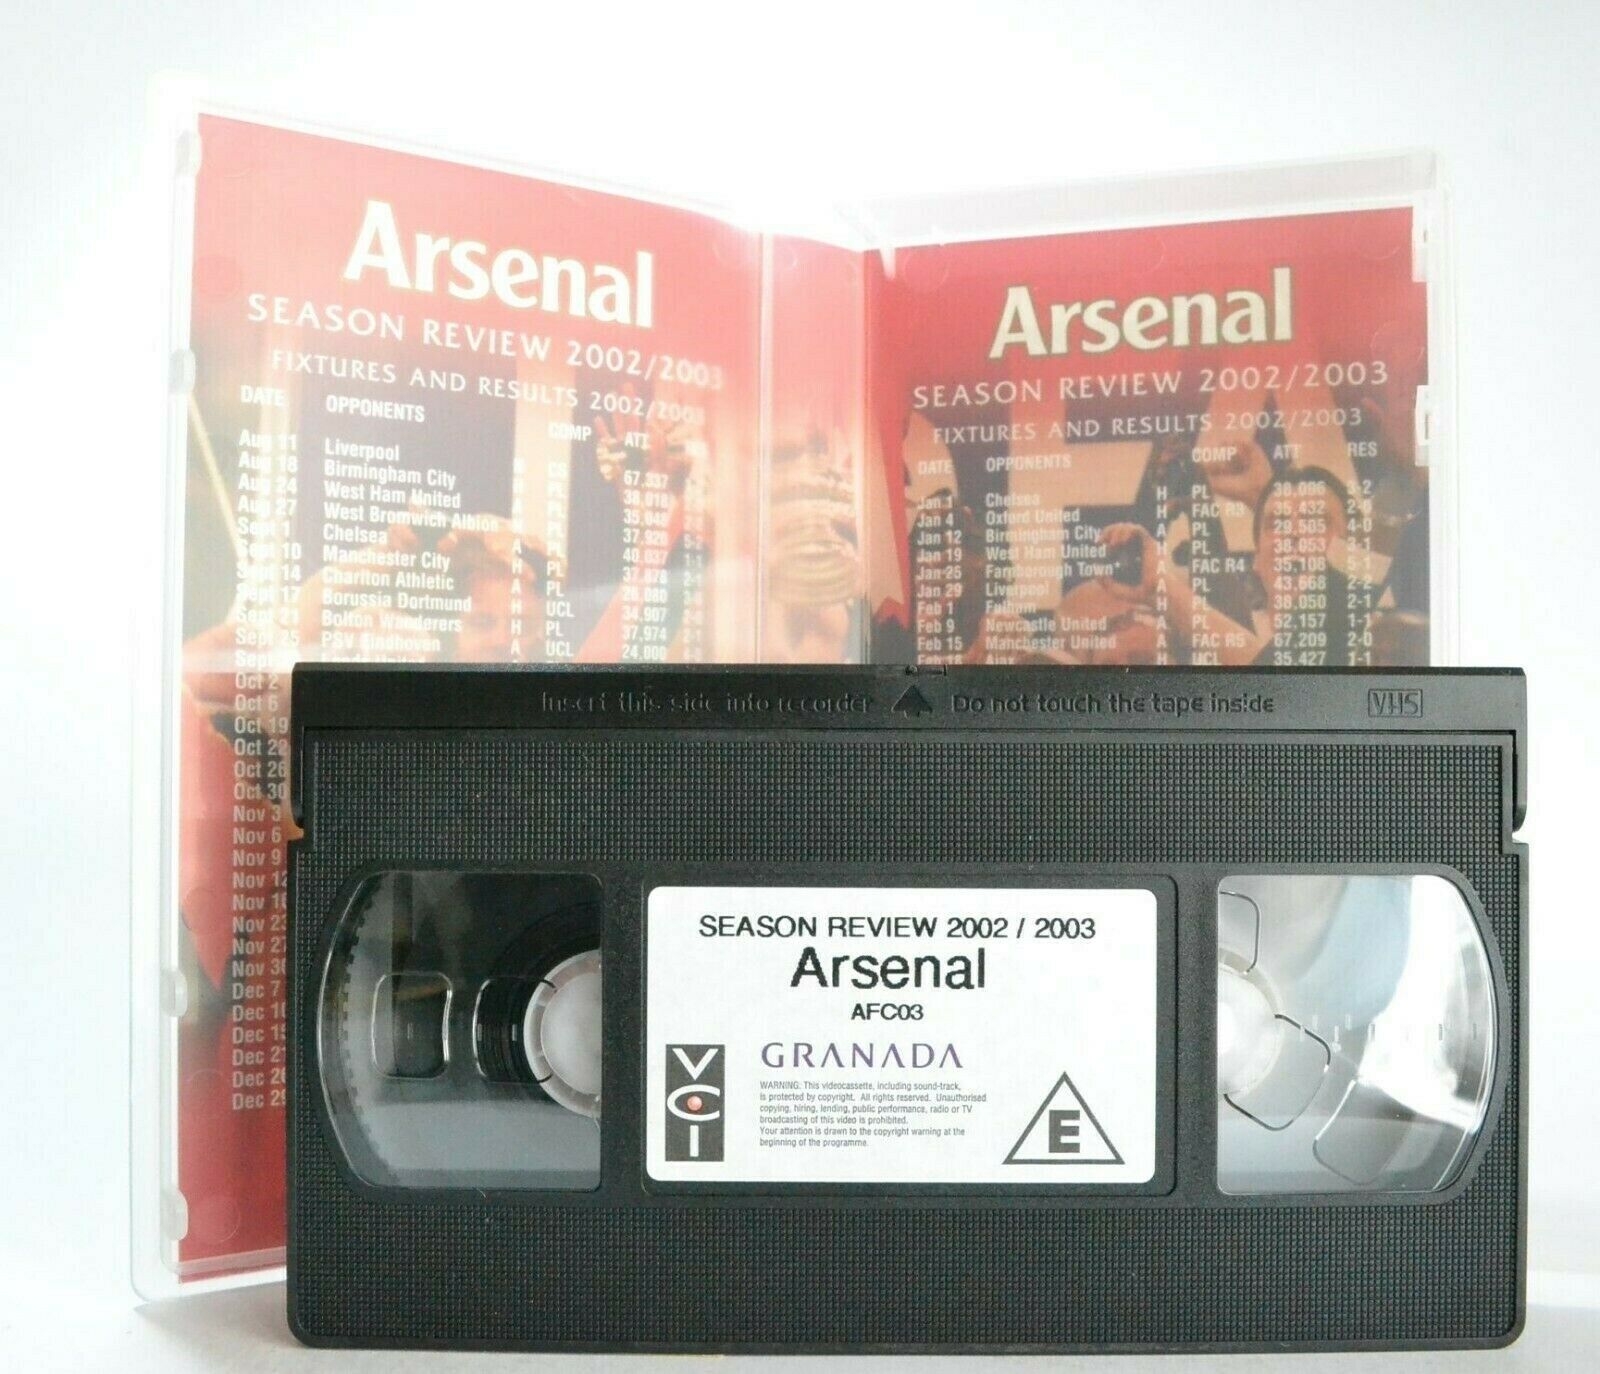 Arsenal: Season Review 2002/03 - Dennis Bergkamp - Thierry Henry - Sports - VHS-